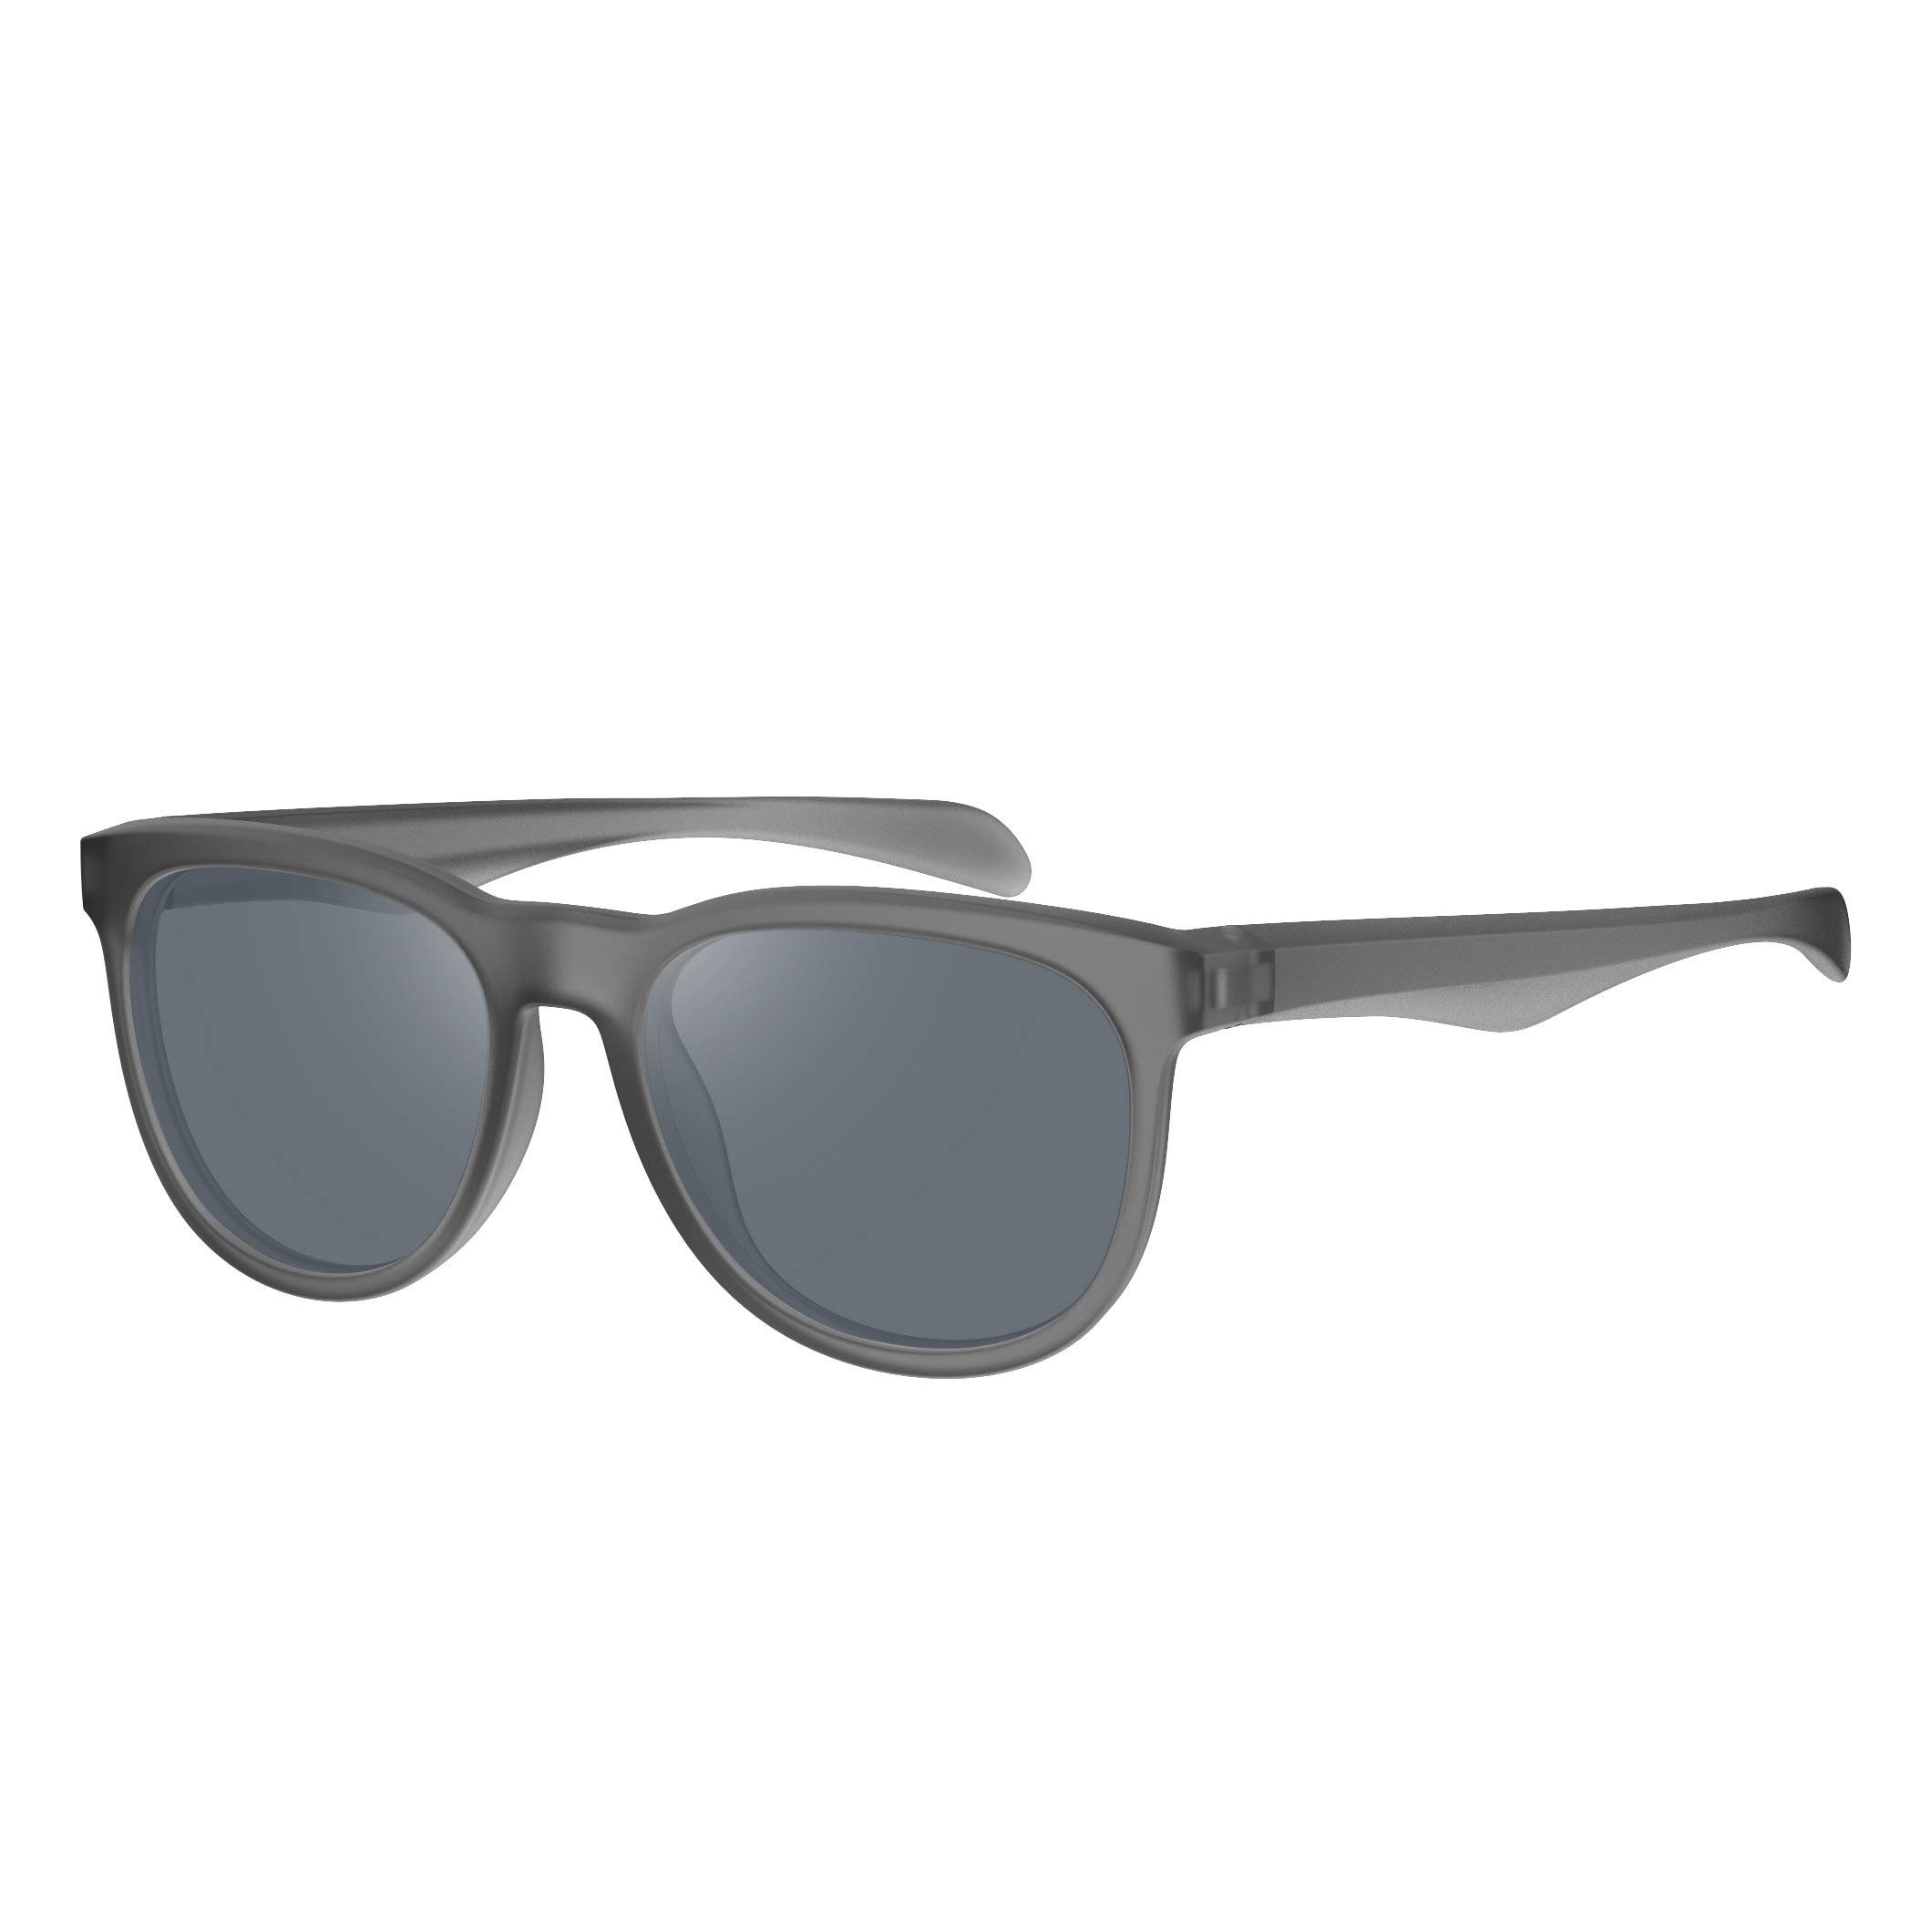 Sonnenbrille Polarisierte Brille Grau Elegear (Panto-Form, Damen Retro) Elegante